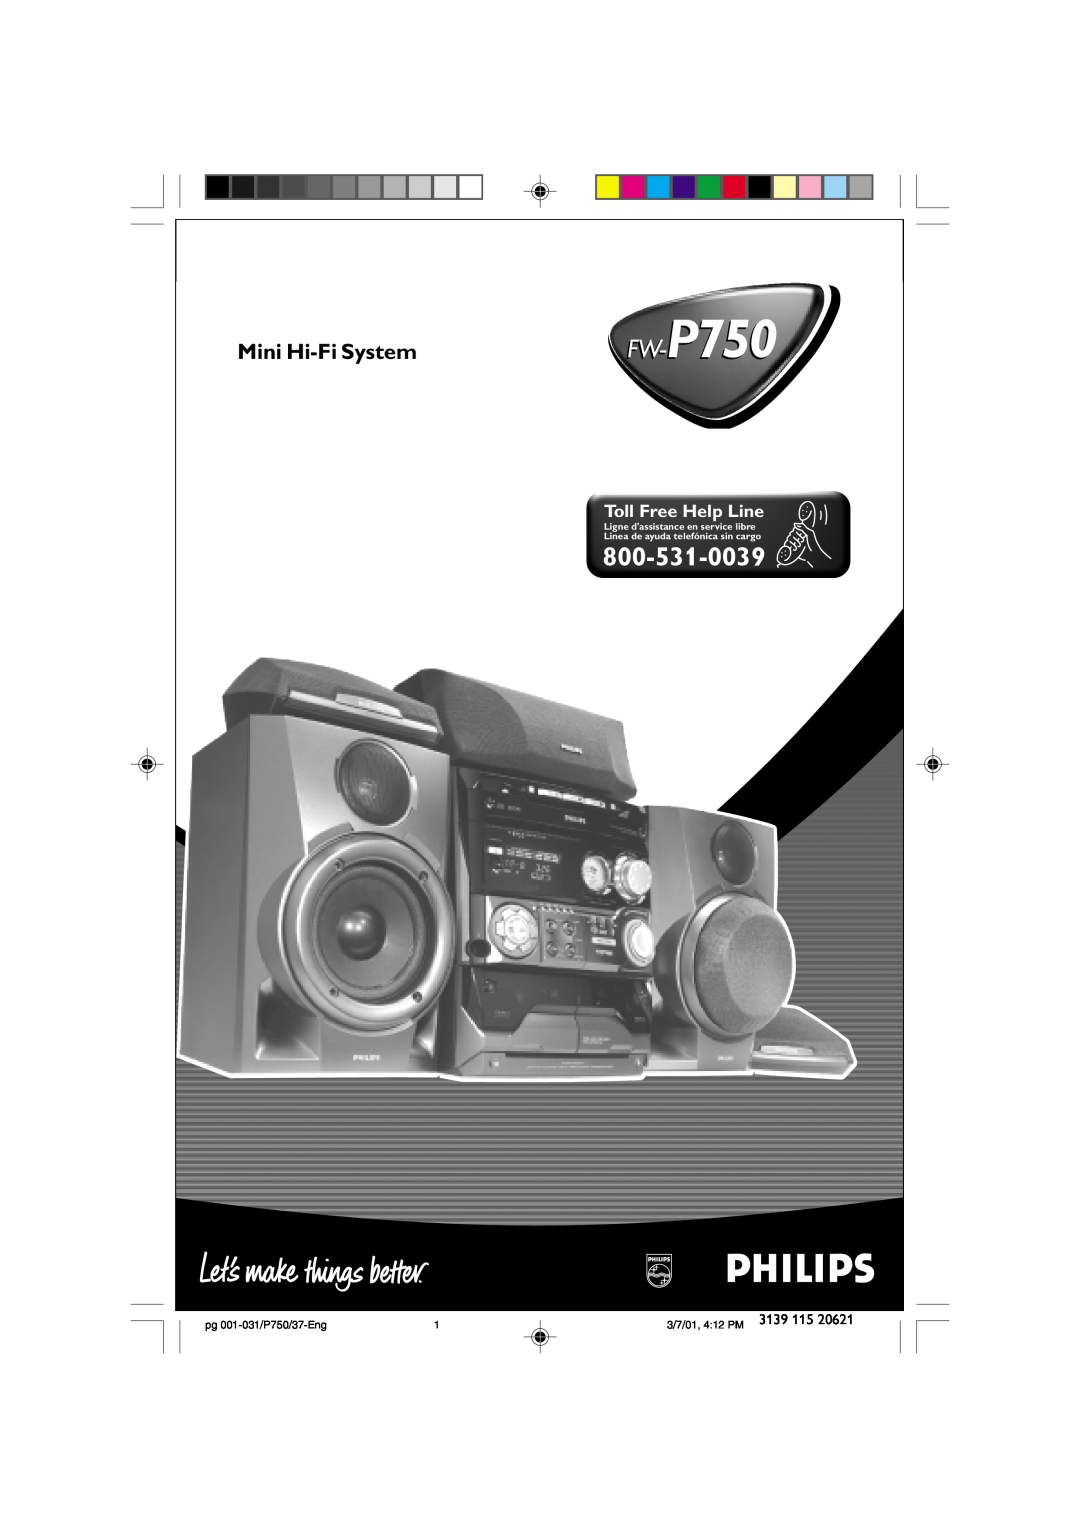 Philips FWP750 manual Mini Hi-FiSystem, FW--P750, 800-531-0039, Toll Free Help Line, pg 001-031/P750/37-Eng 